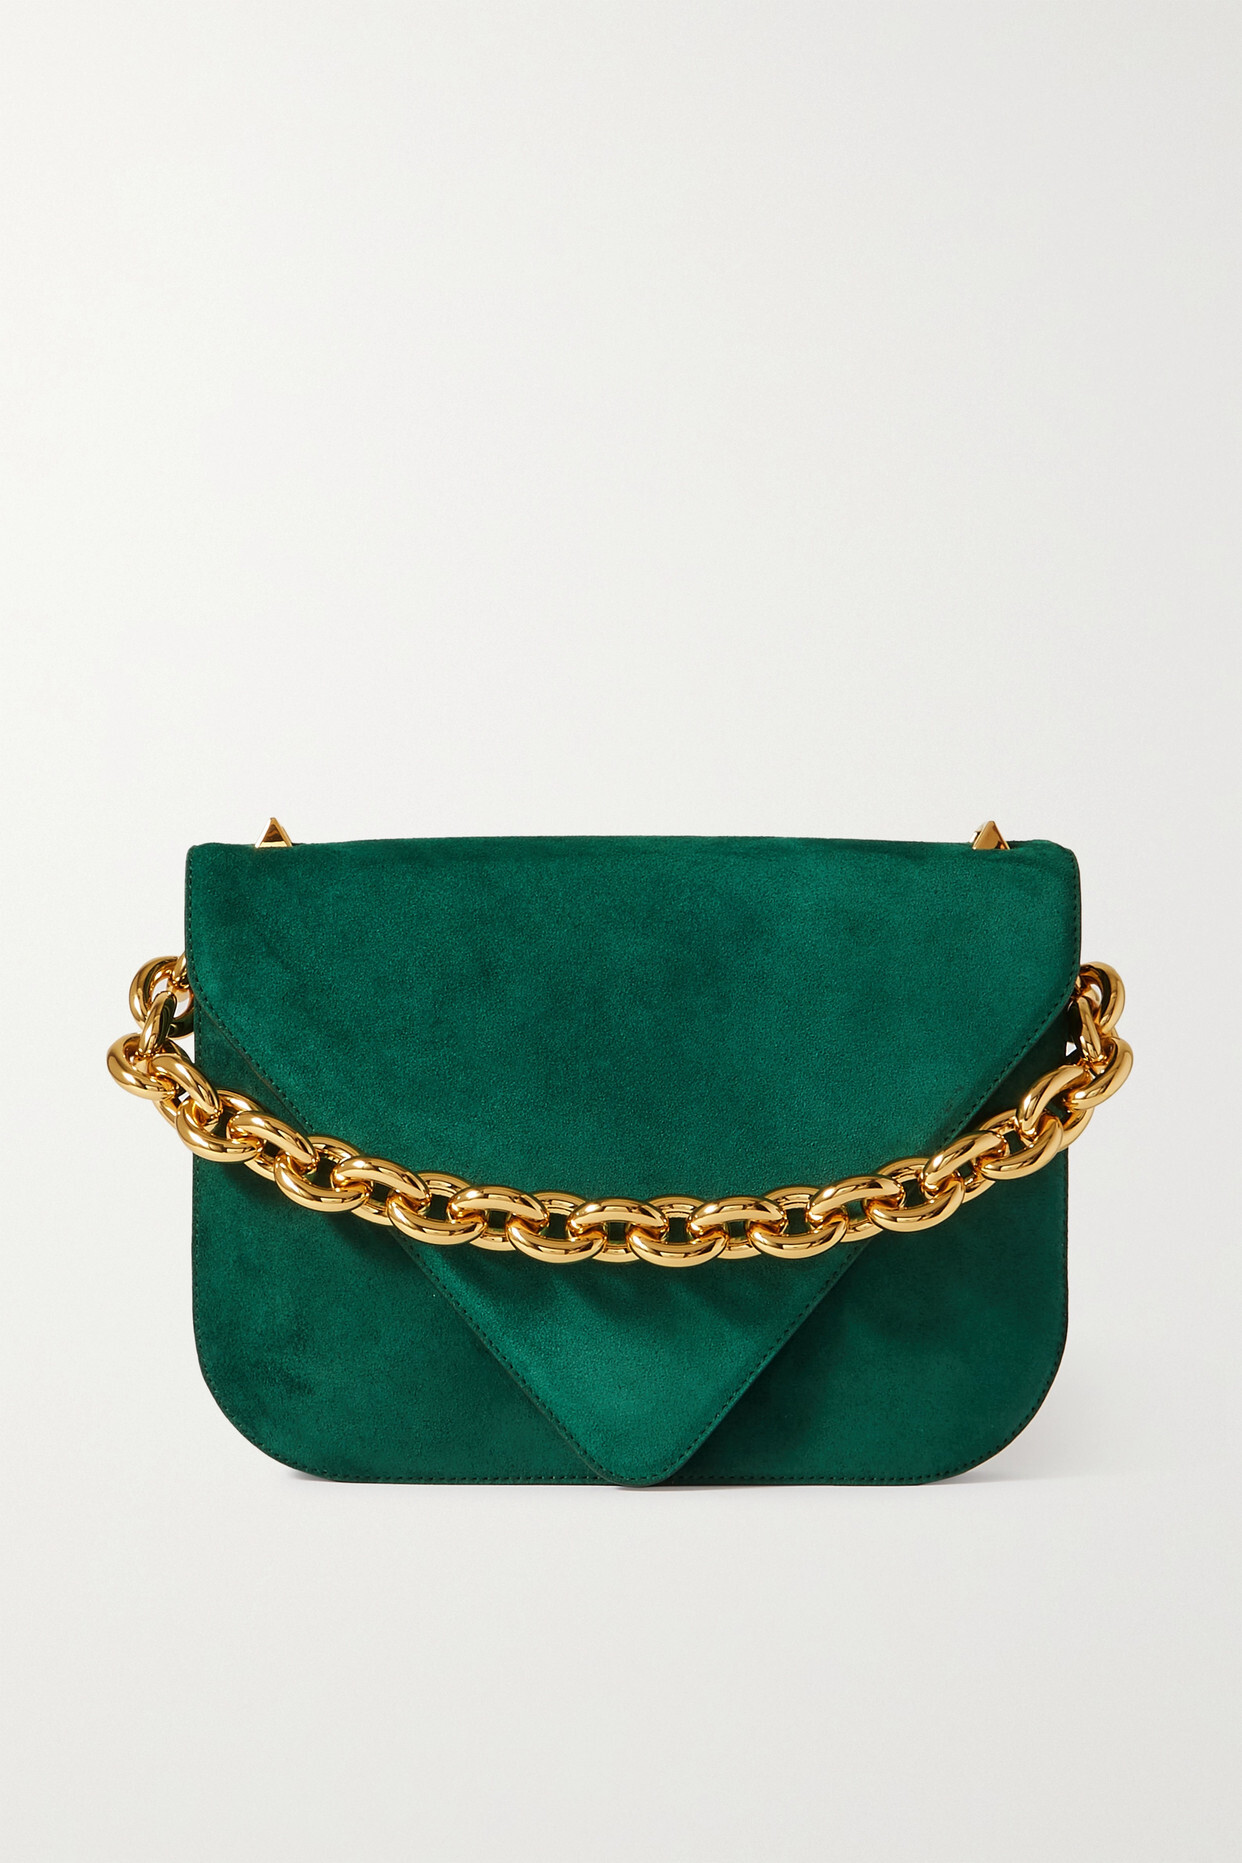 Bottega Veneta - Chain Large Suede Shoulder Bag - Green